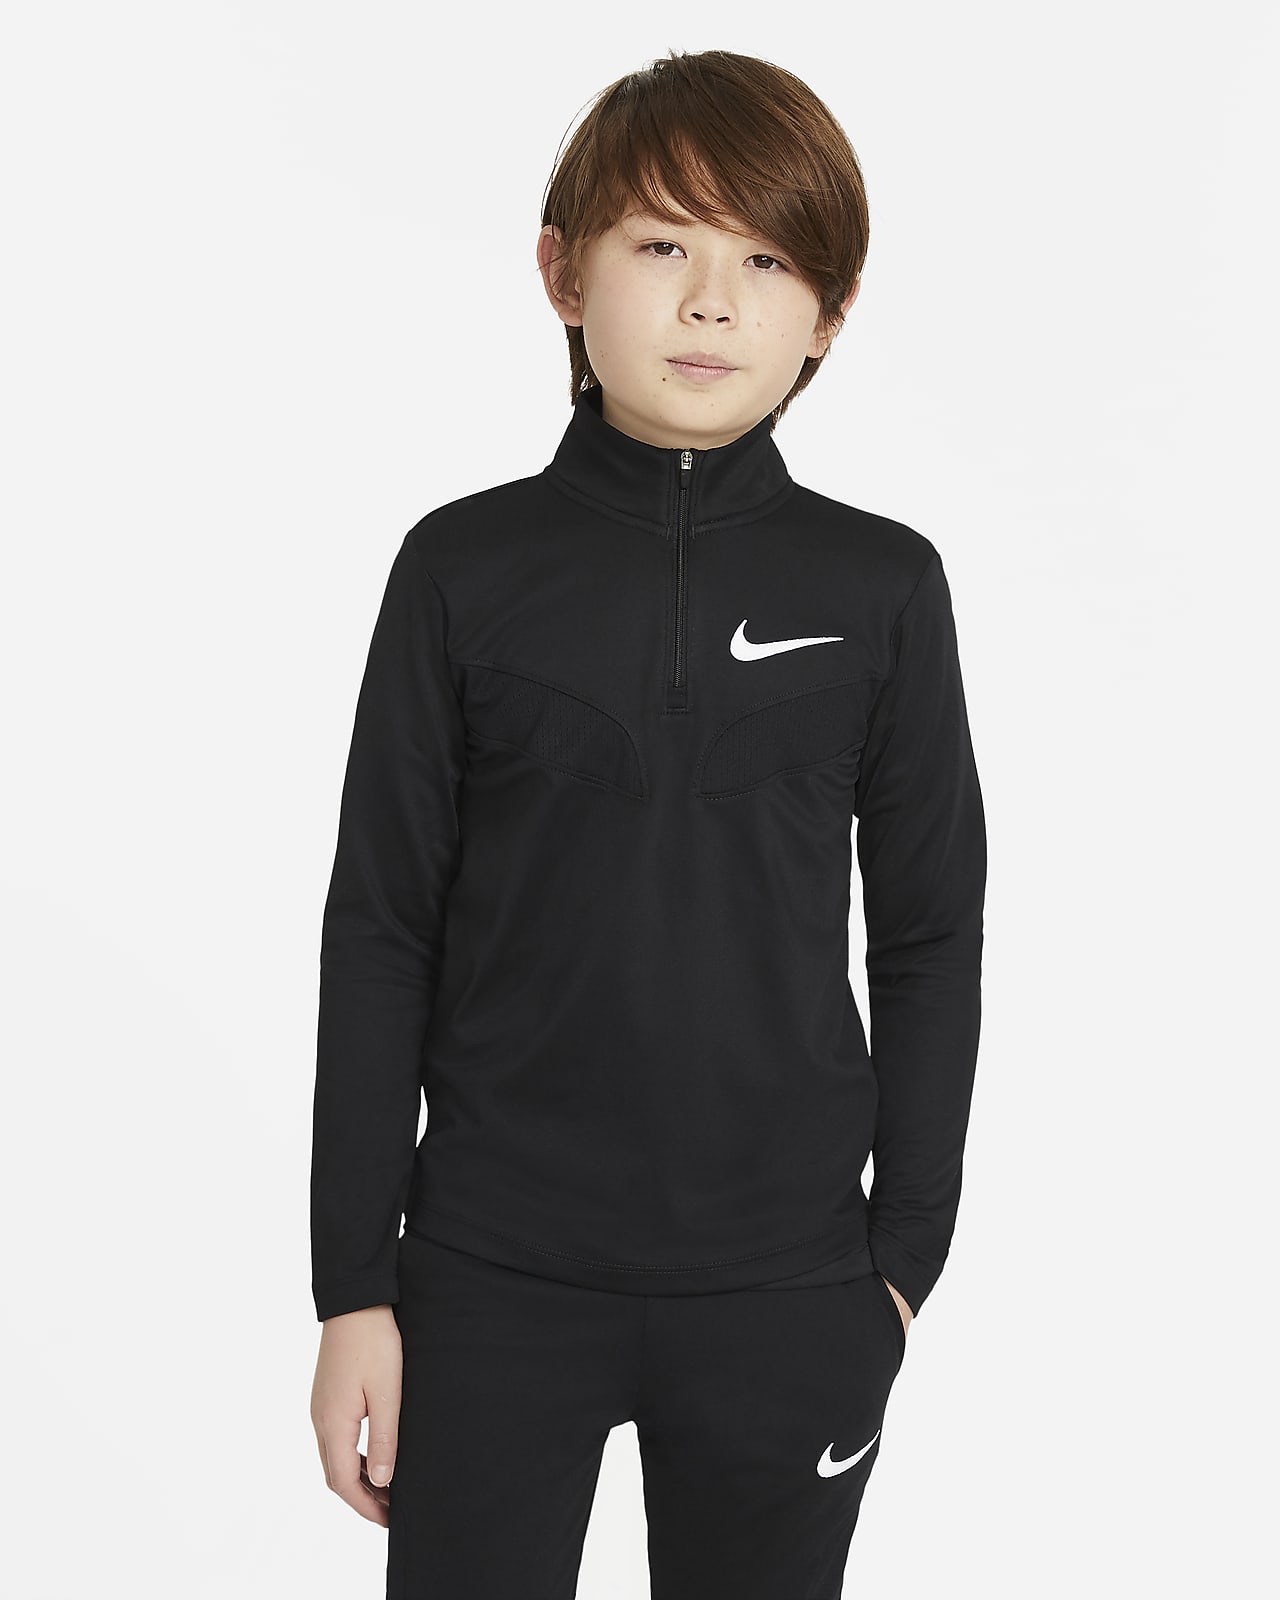 Nike Sport Big Kids' (Boys') Long-Sleeve Training Top